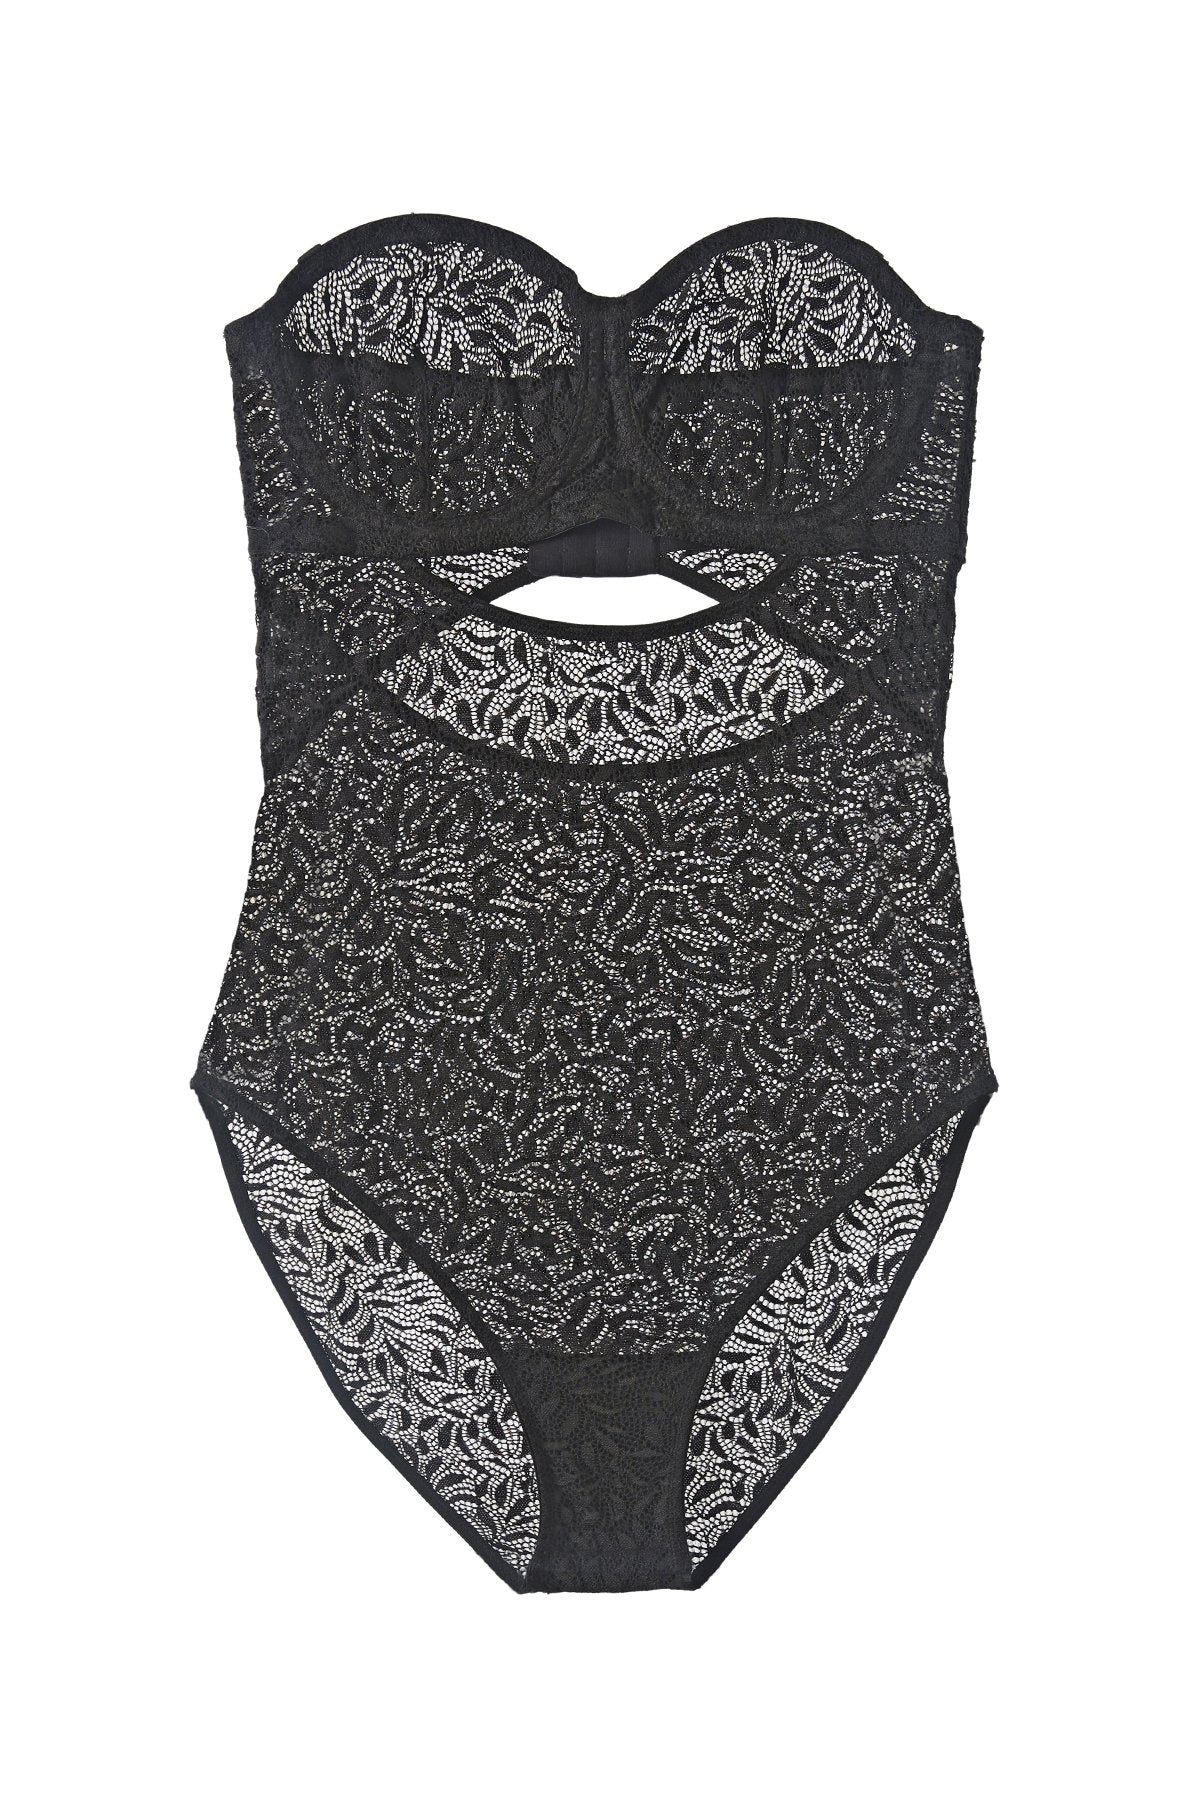 Else Lingerie Acacia Underwire Strapless Bodysuit | Black